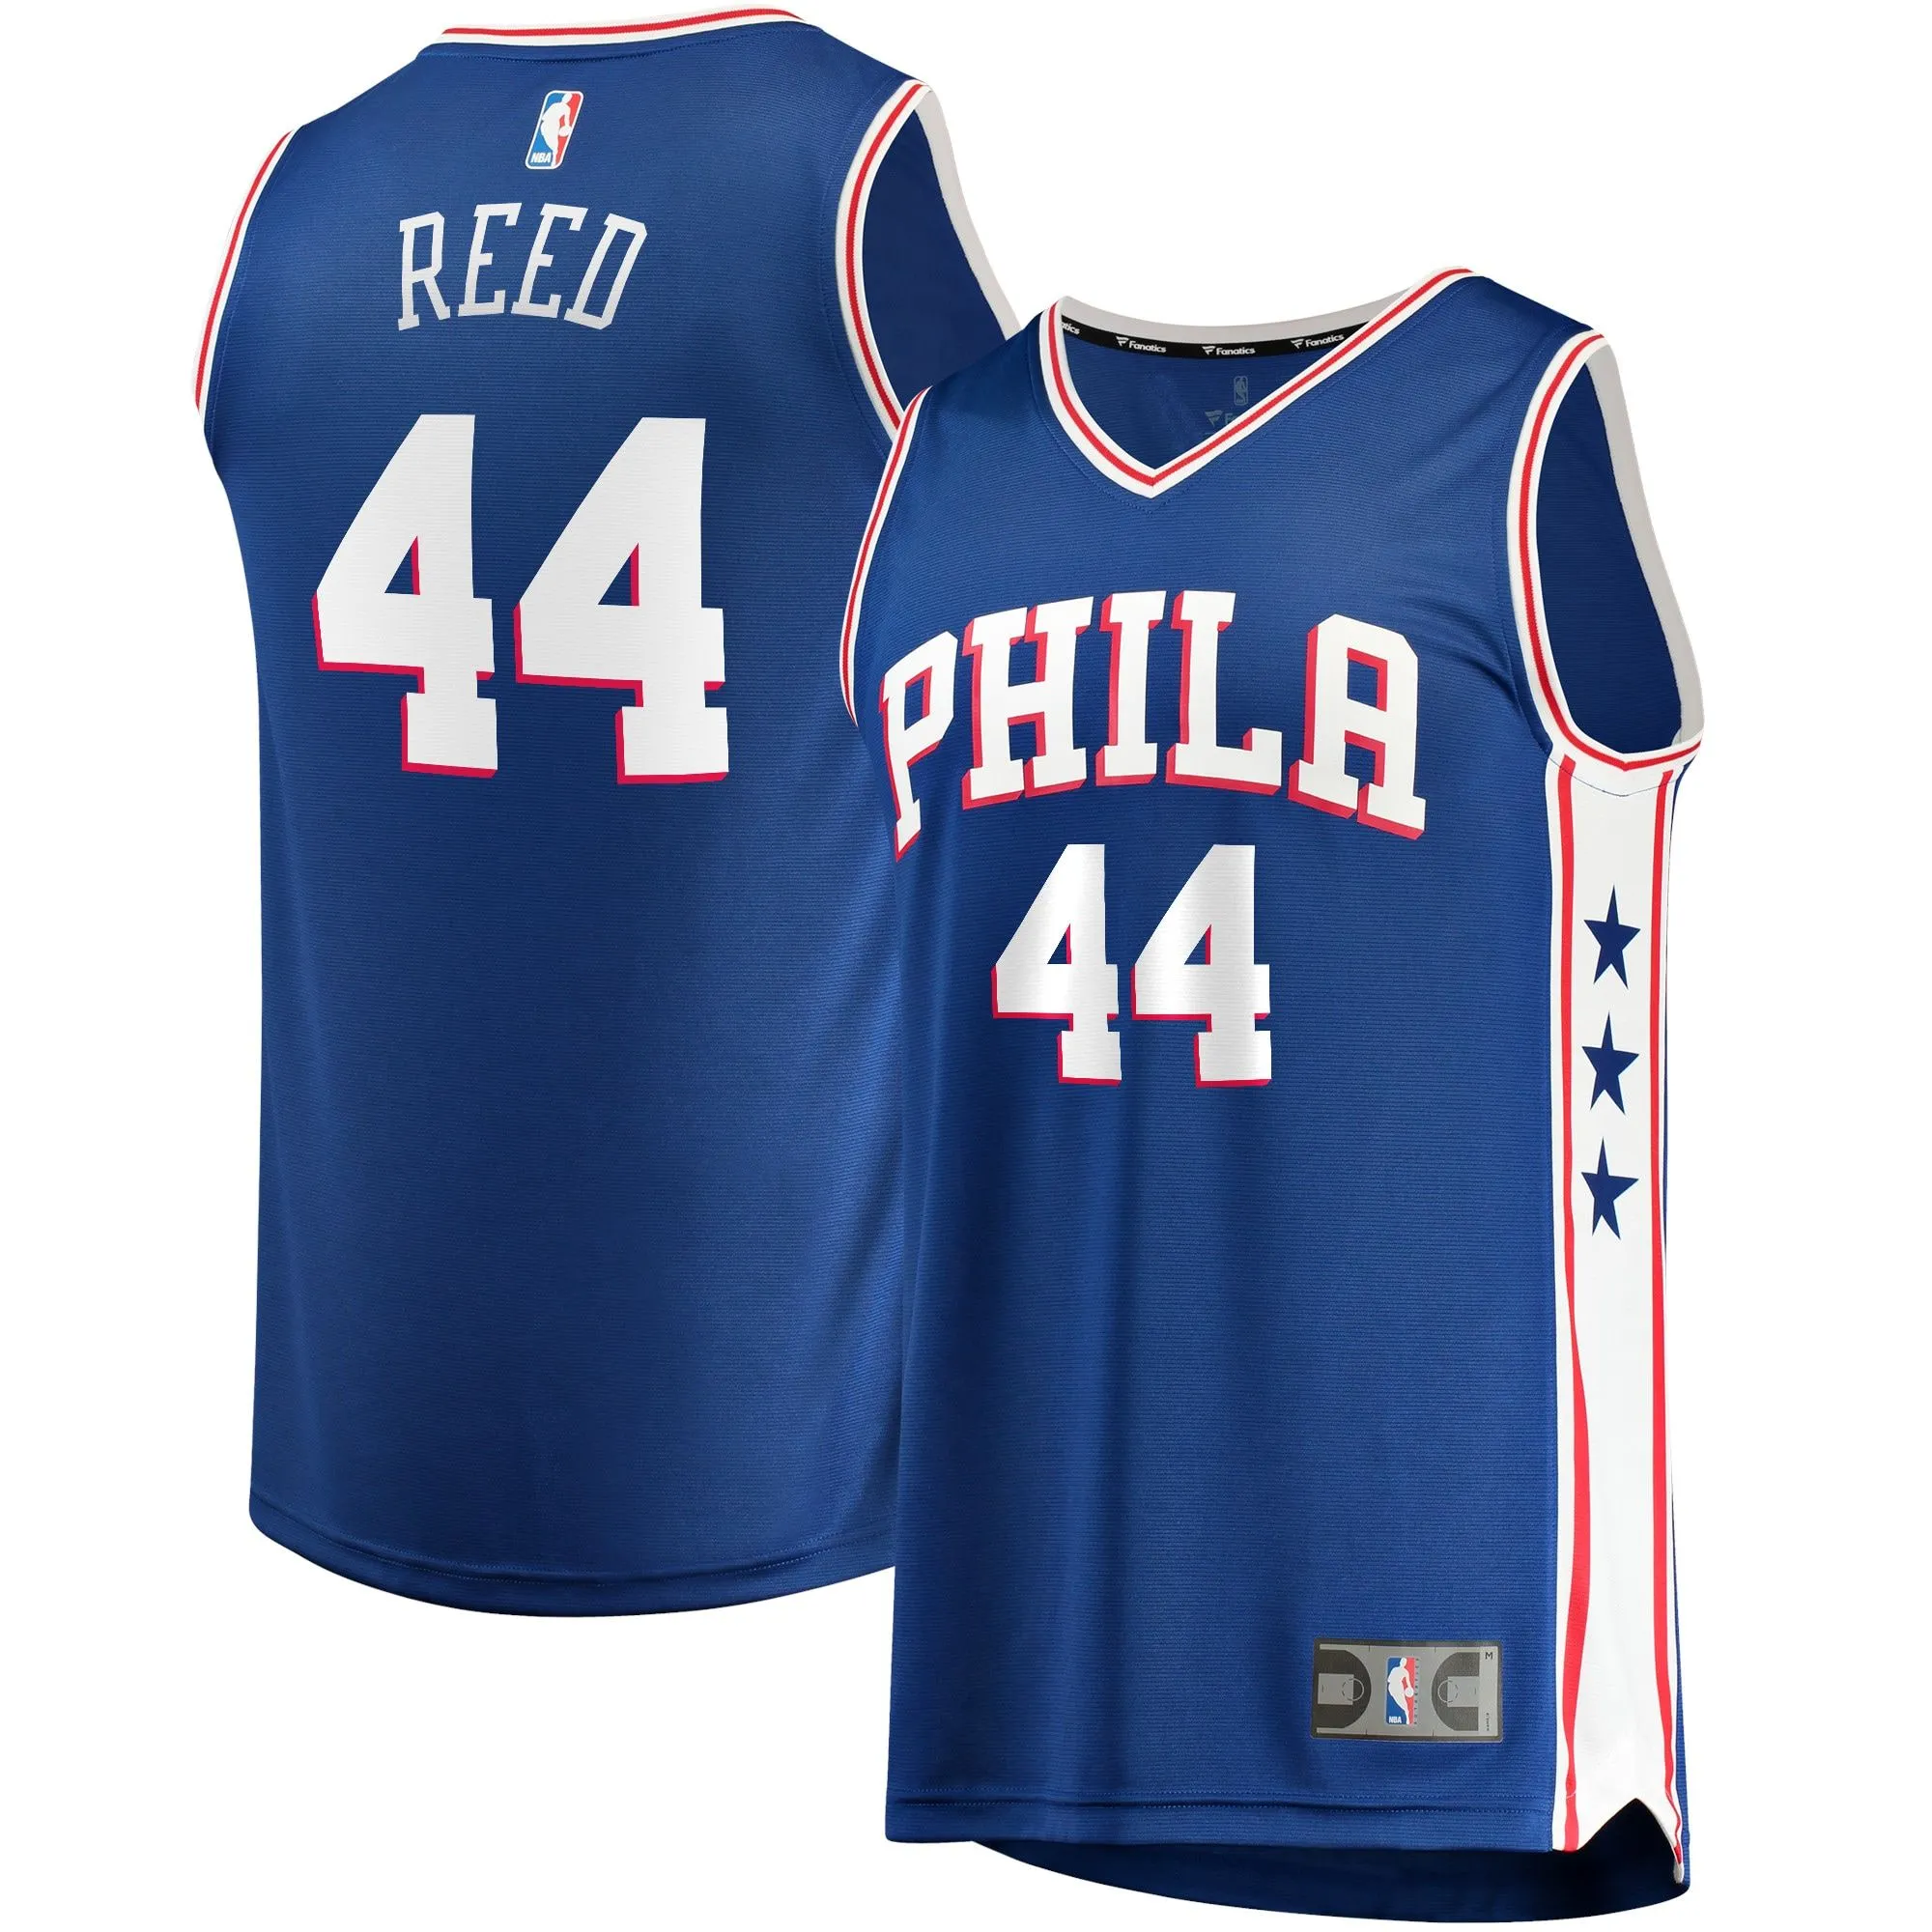 Paul Reed Philadelphia 76ers Fanatics Branded Fast Break Replica Jersey - Icon Edition - Royal